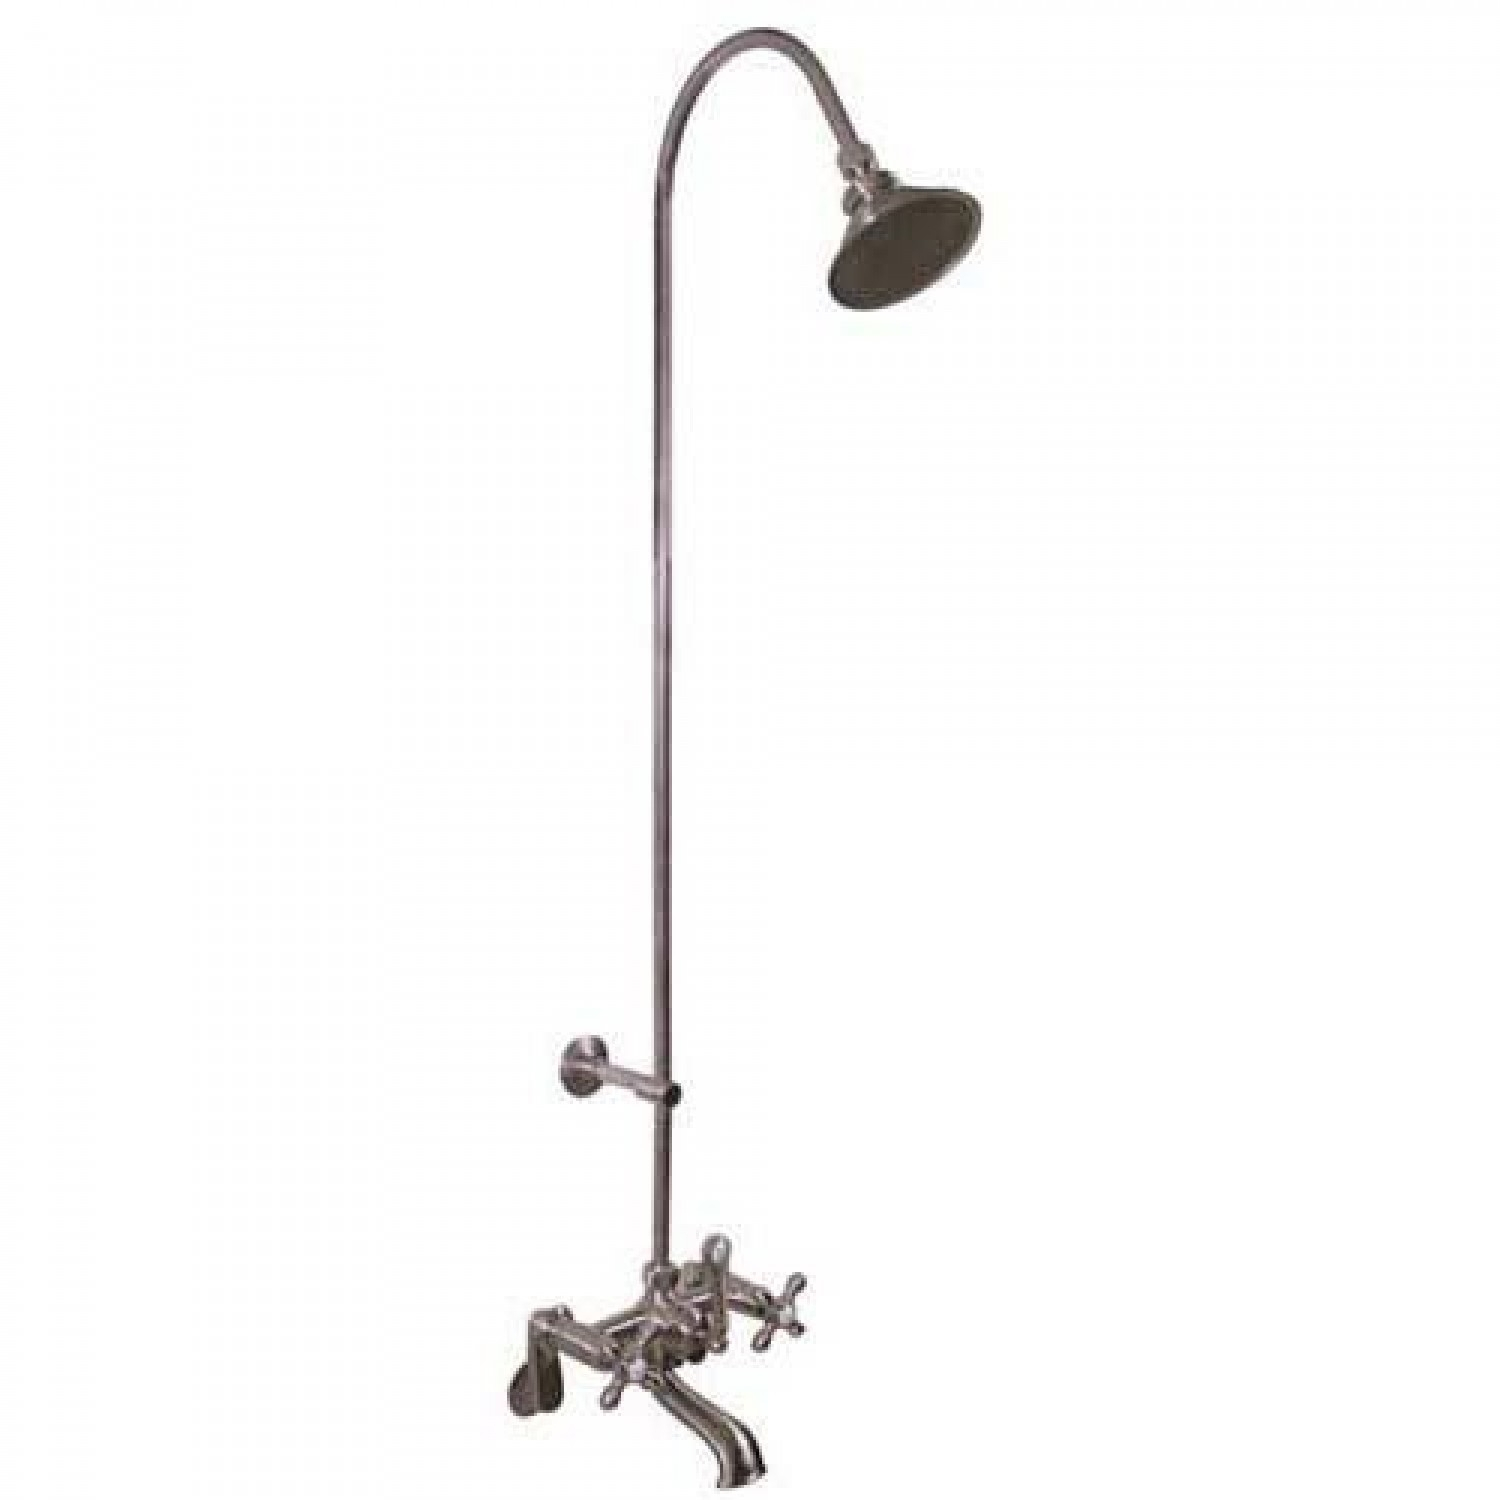 Bathtub Faucet With External Diverter For Shower throughout measurements 1500 X 1500